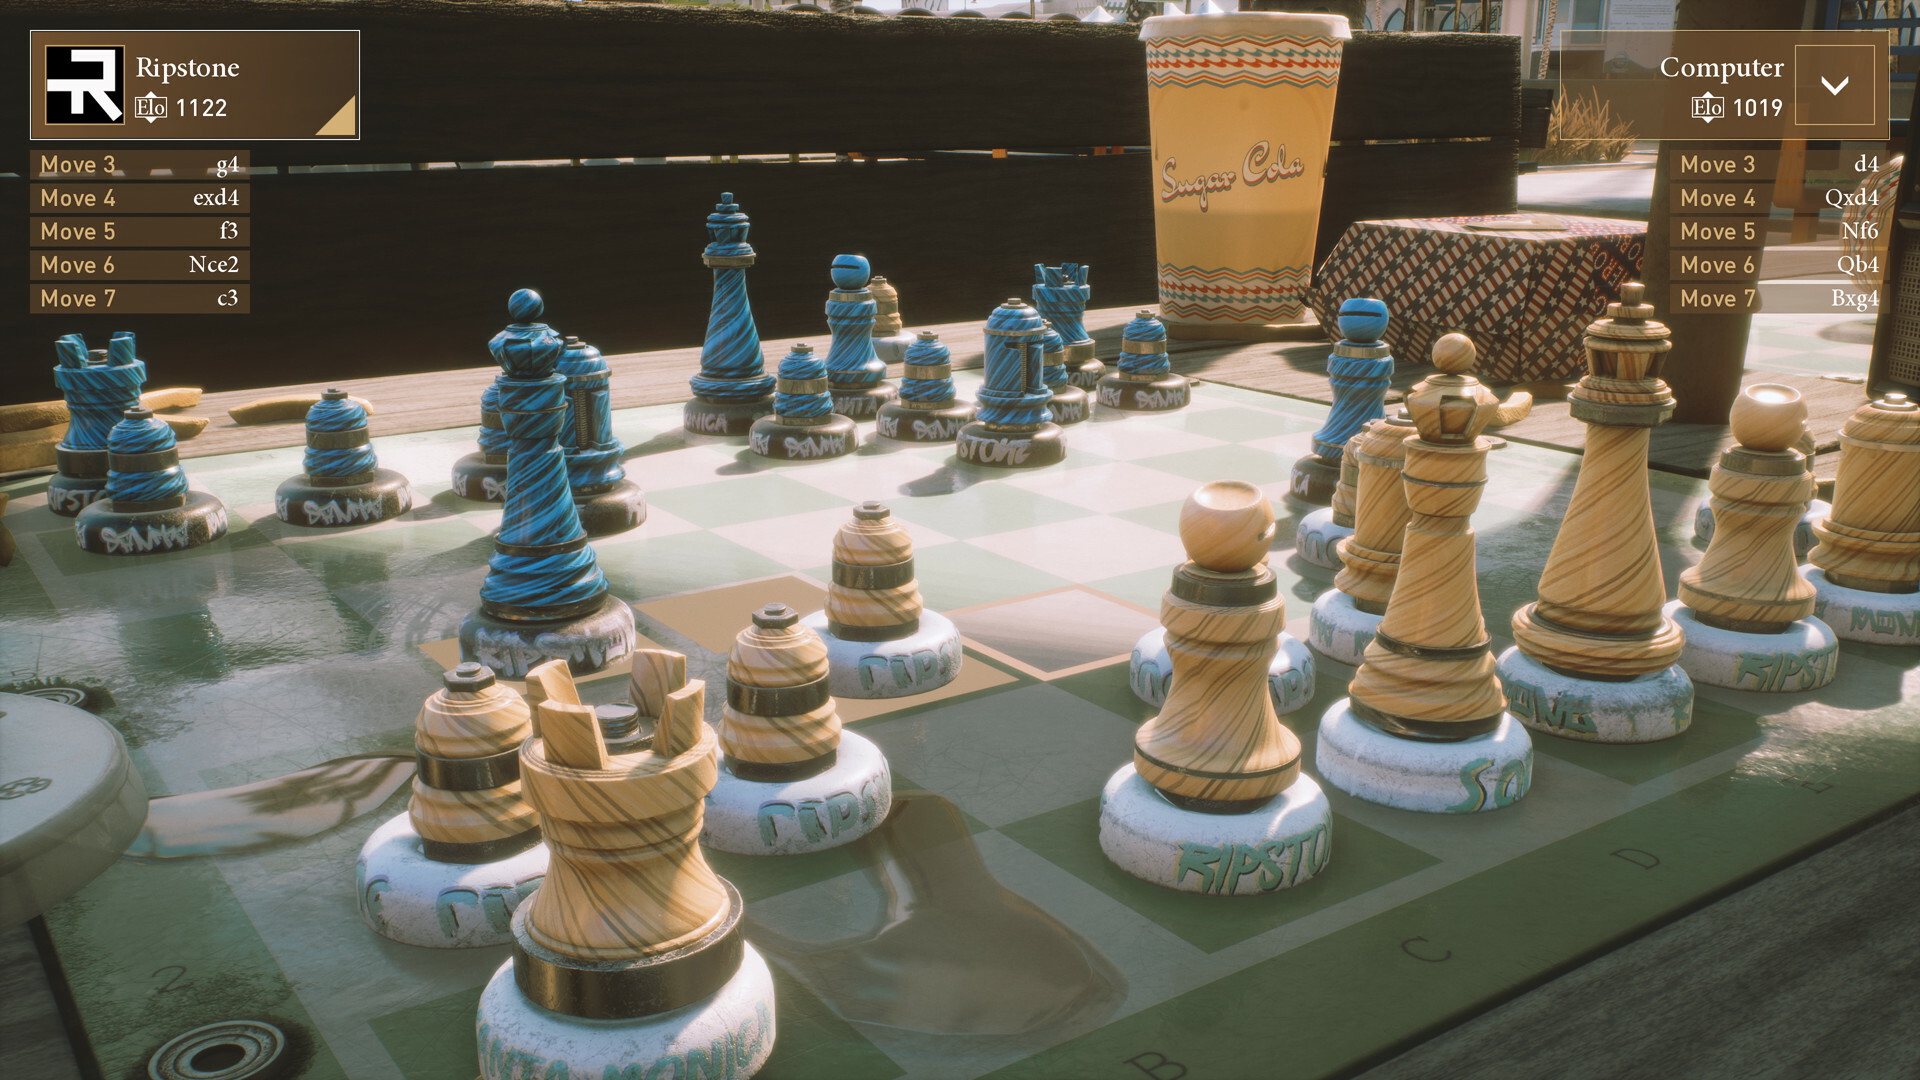 Jake Parrott - Santa Monica Chess Set - Chess Ultra